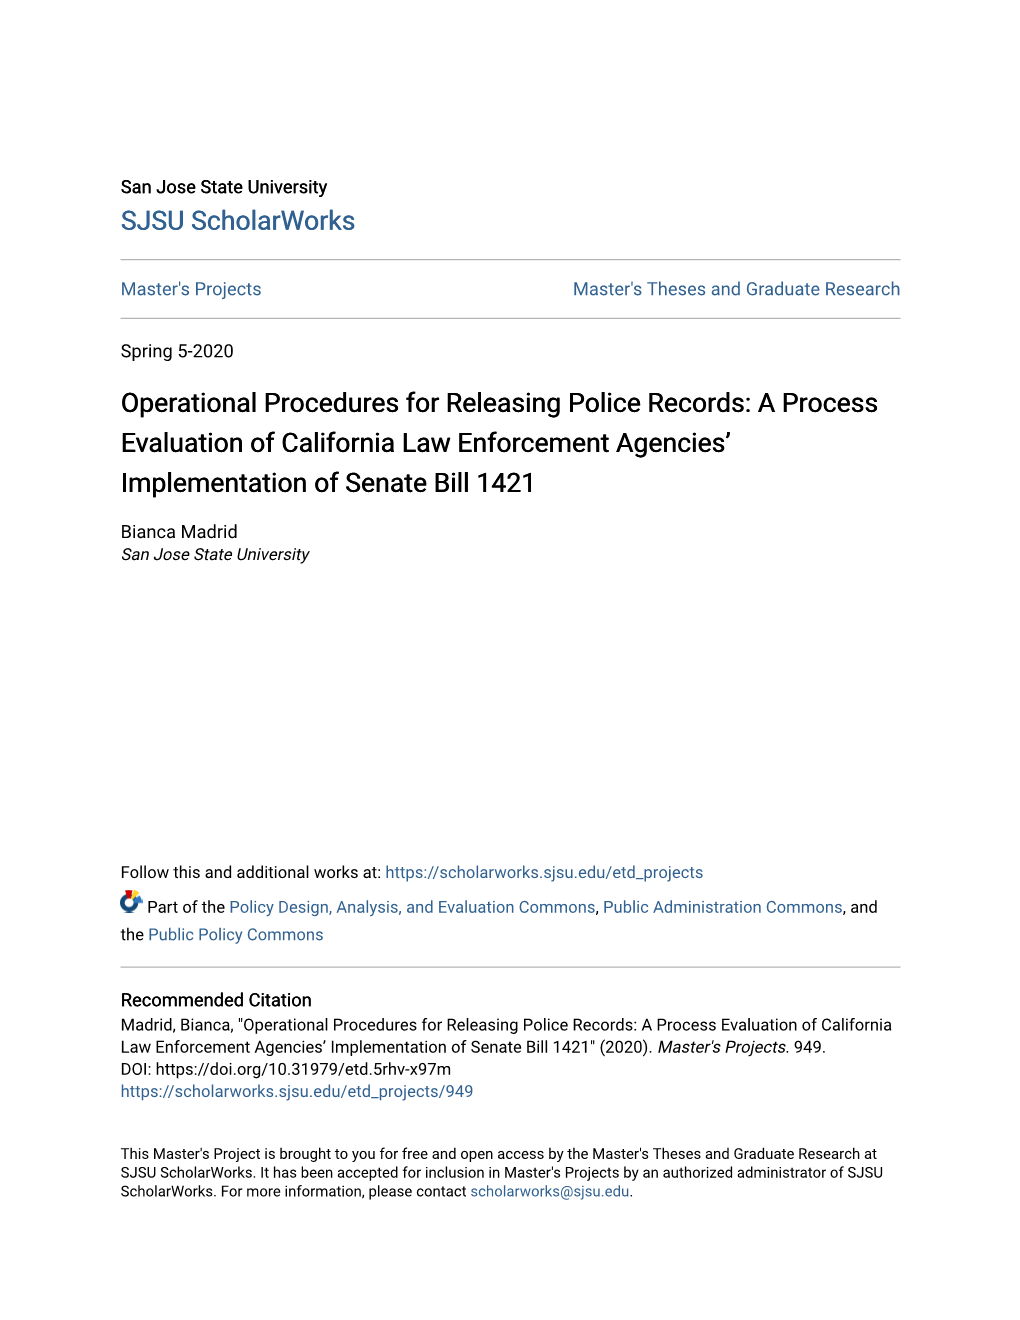 A Process Evaluation of California Law Enforcement Agencies’ Implementation of Senate Bill 1421